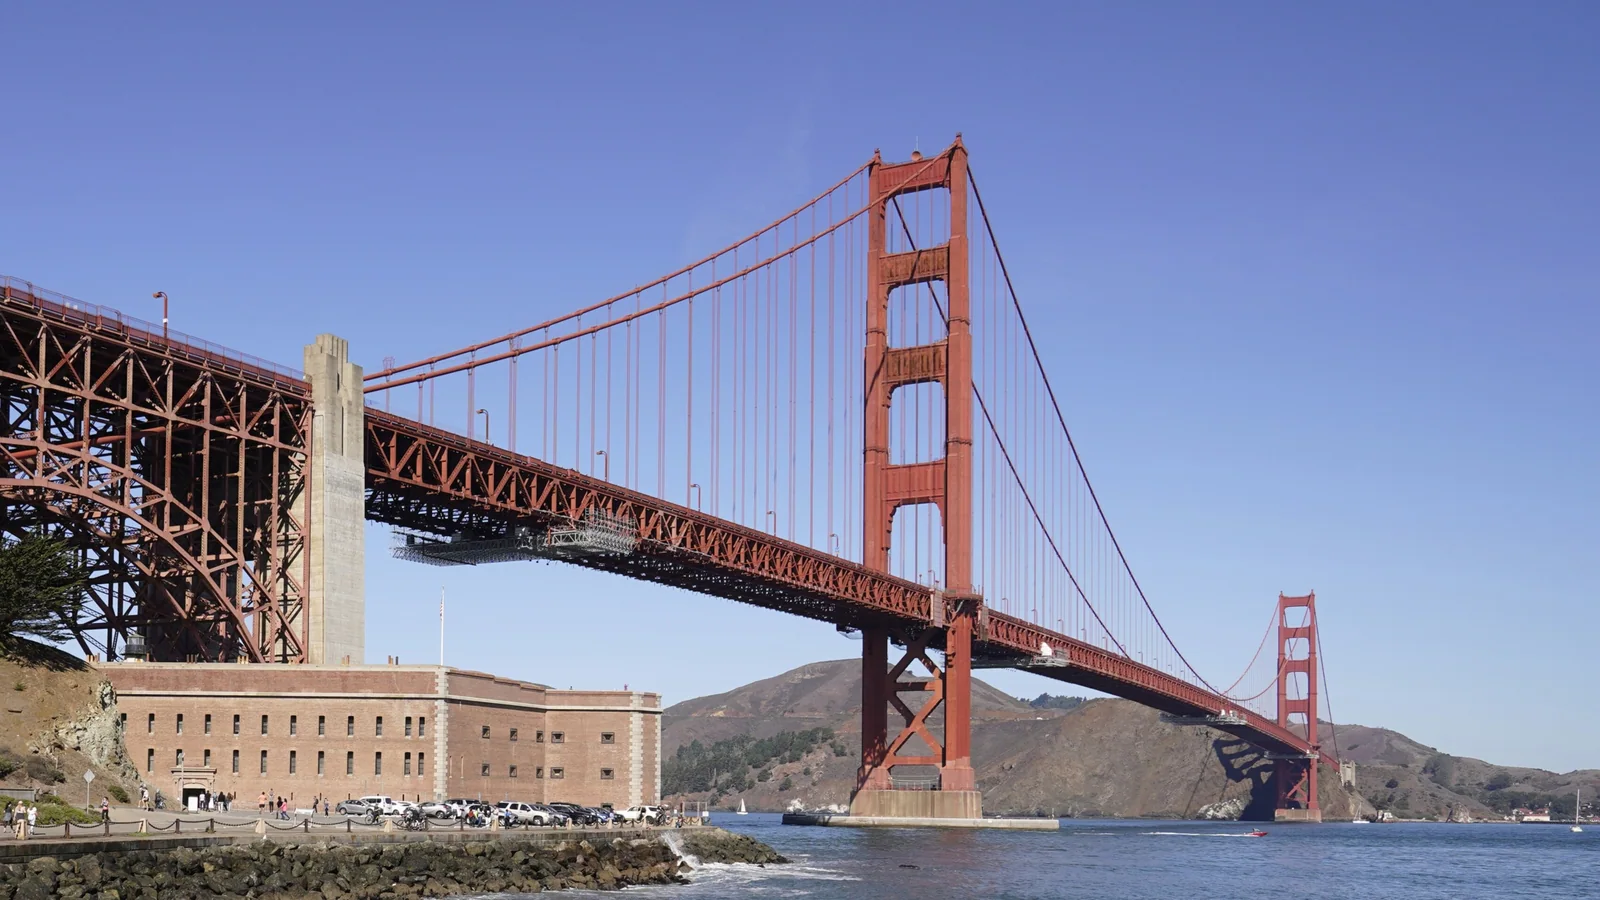 Indian American Boy Golden Gate Bridge - The Inspirational Story Behind